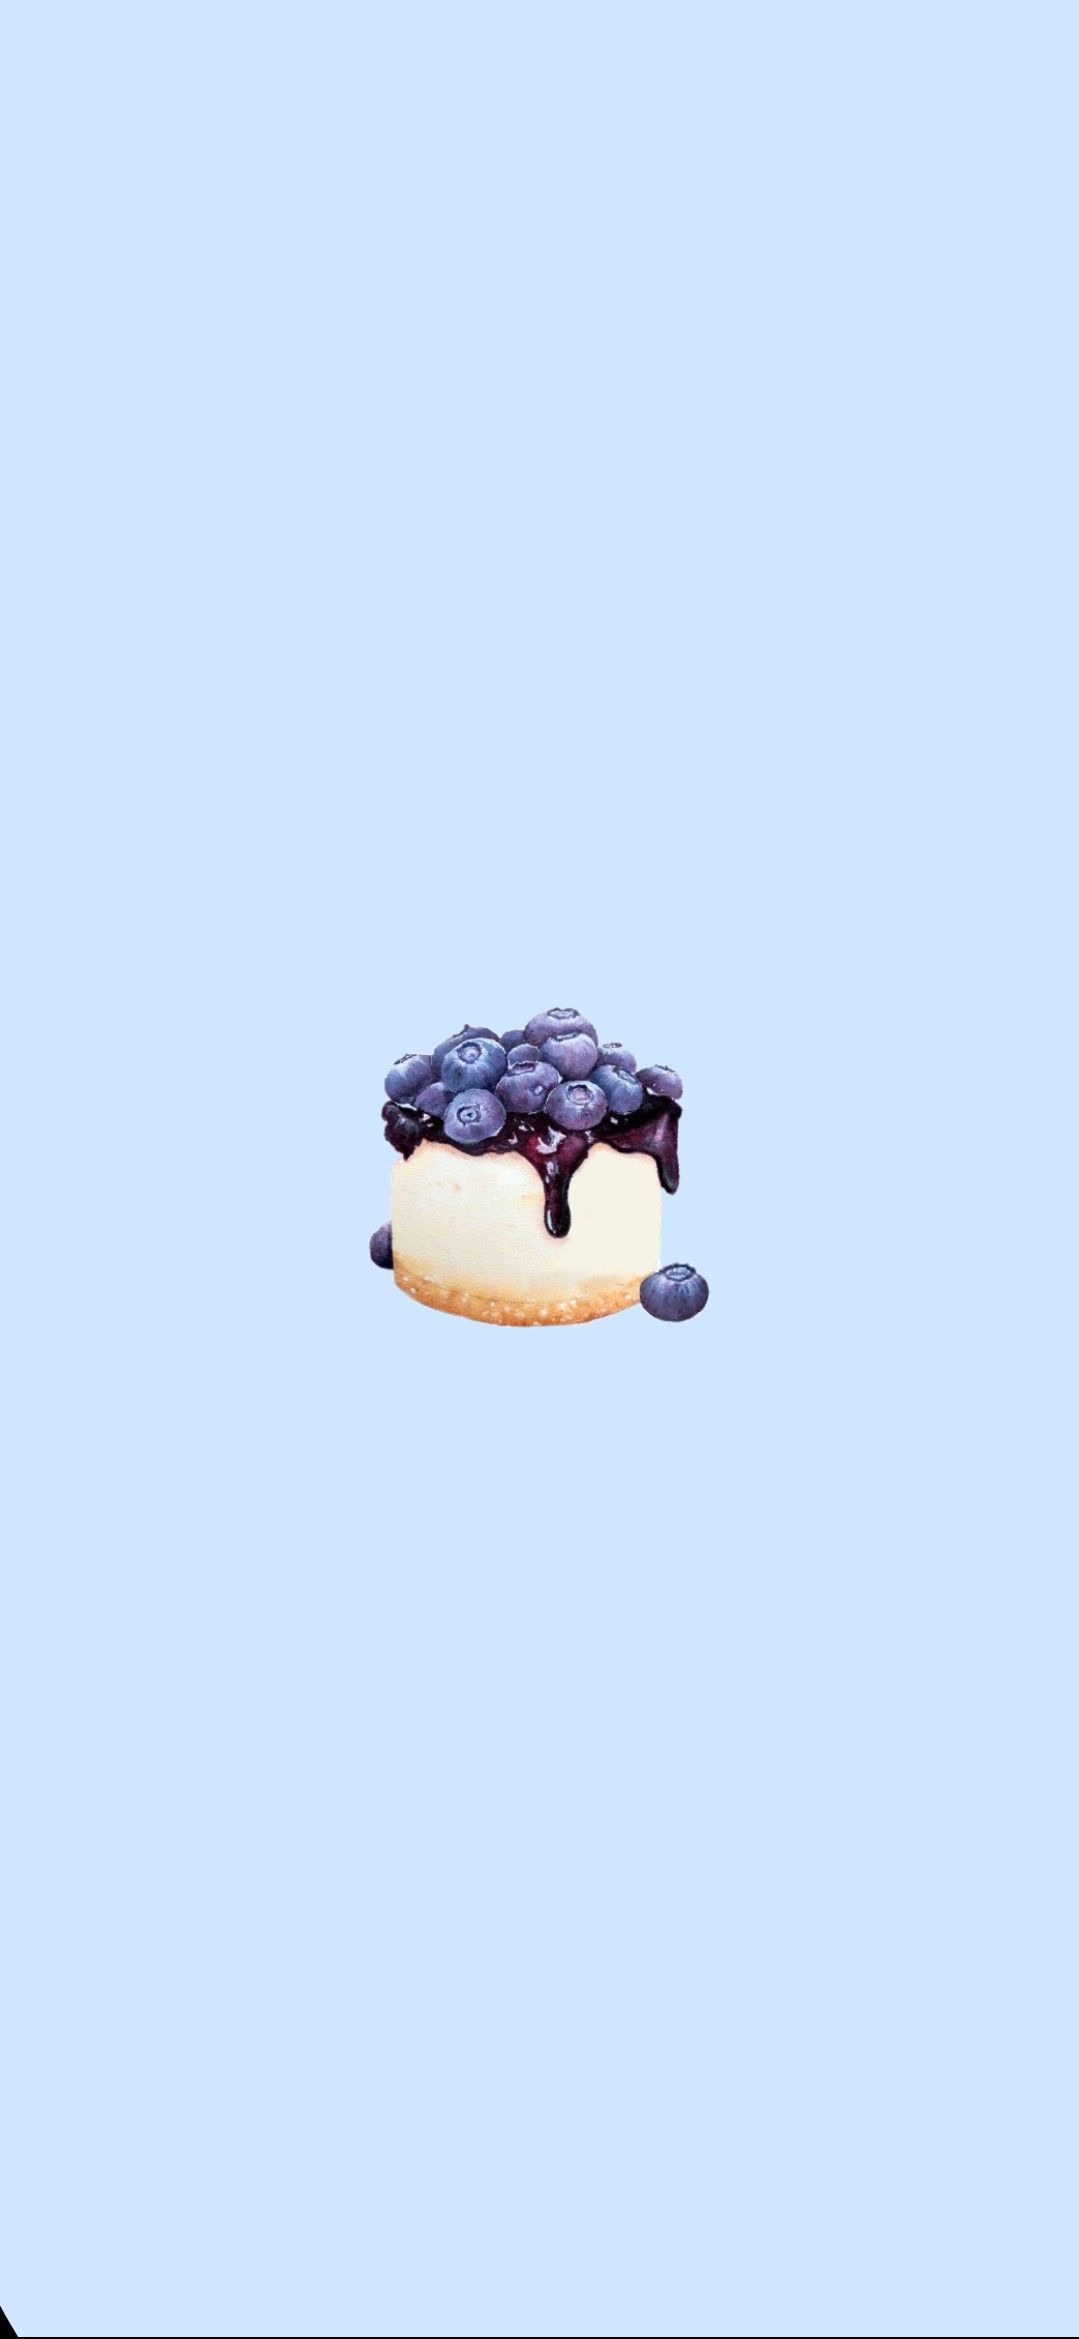 cute blue blueberry cake iPhone wallpaper. Cake wallpaper, Best iphone wallpaper, Pretty wallpaper iphone